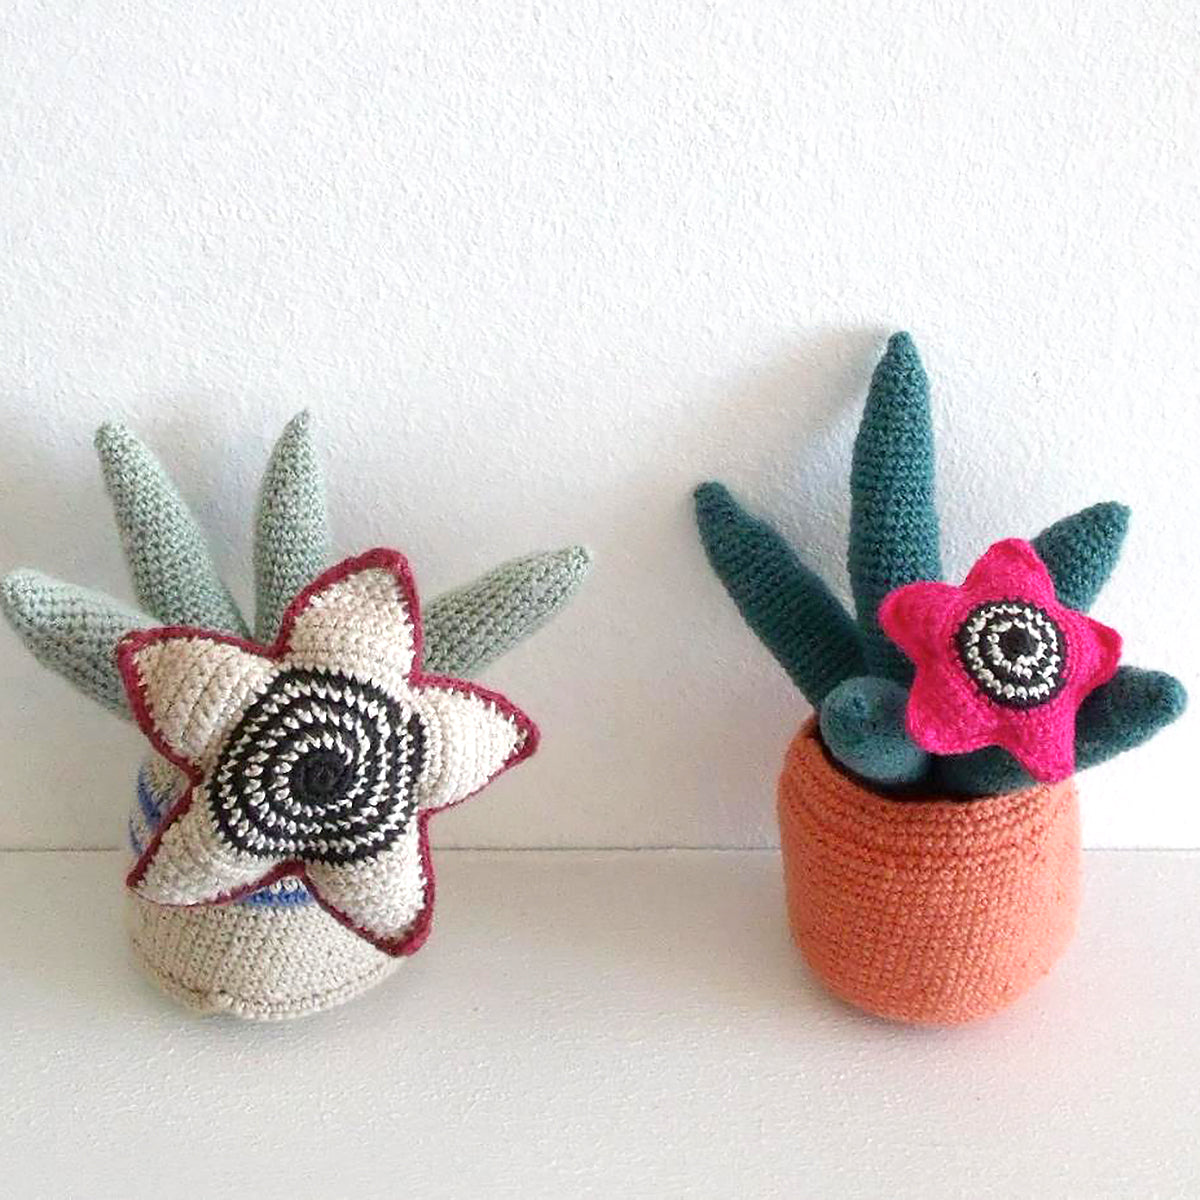 Safari Journal / Blog by Safari Fusion | Hand-knitted veld flowers | Crochet Cactus